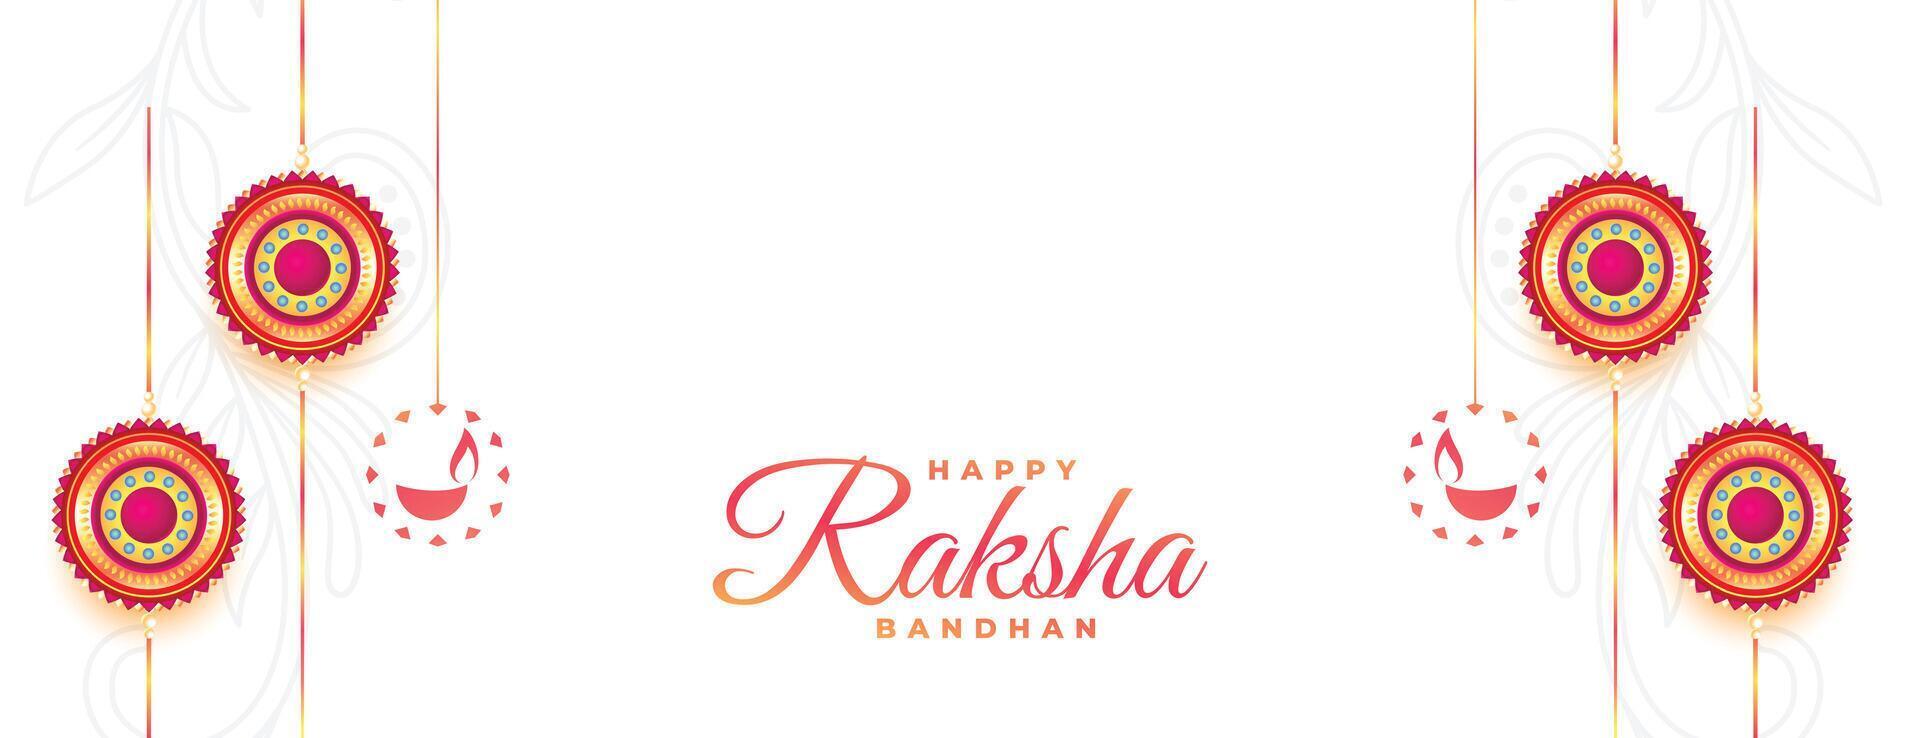 Raksha bandhan bianca Festival bandiera con rakhi e sospeso diya design vettore